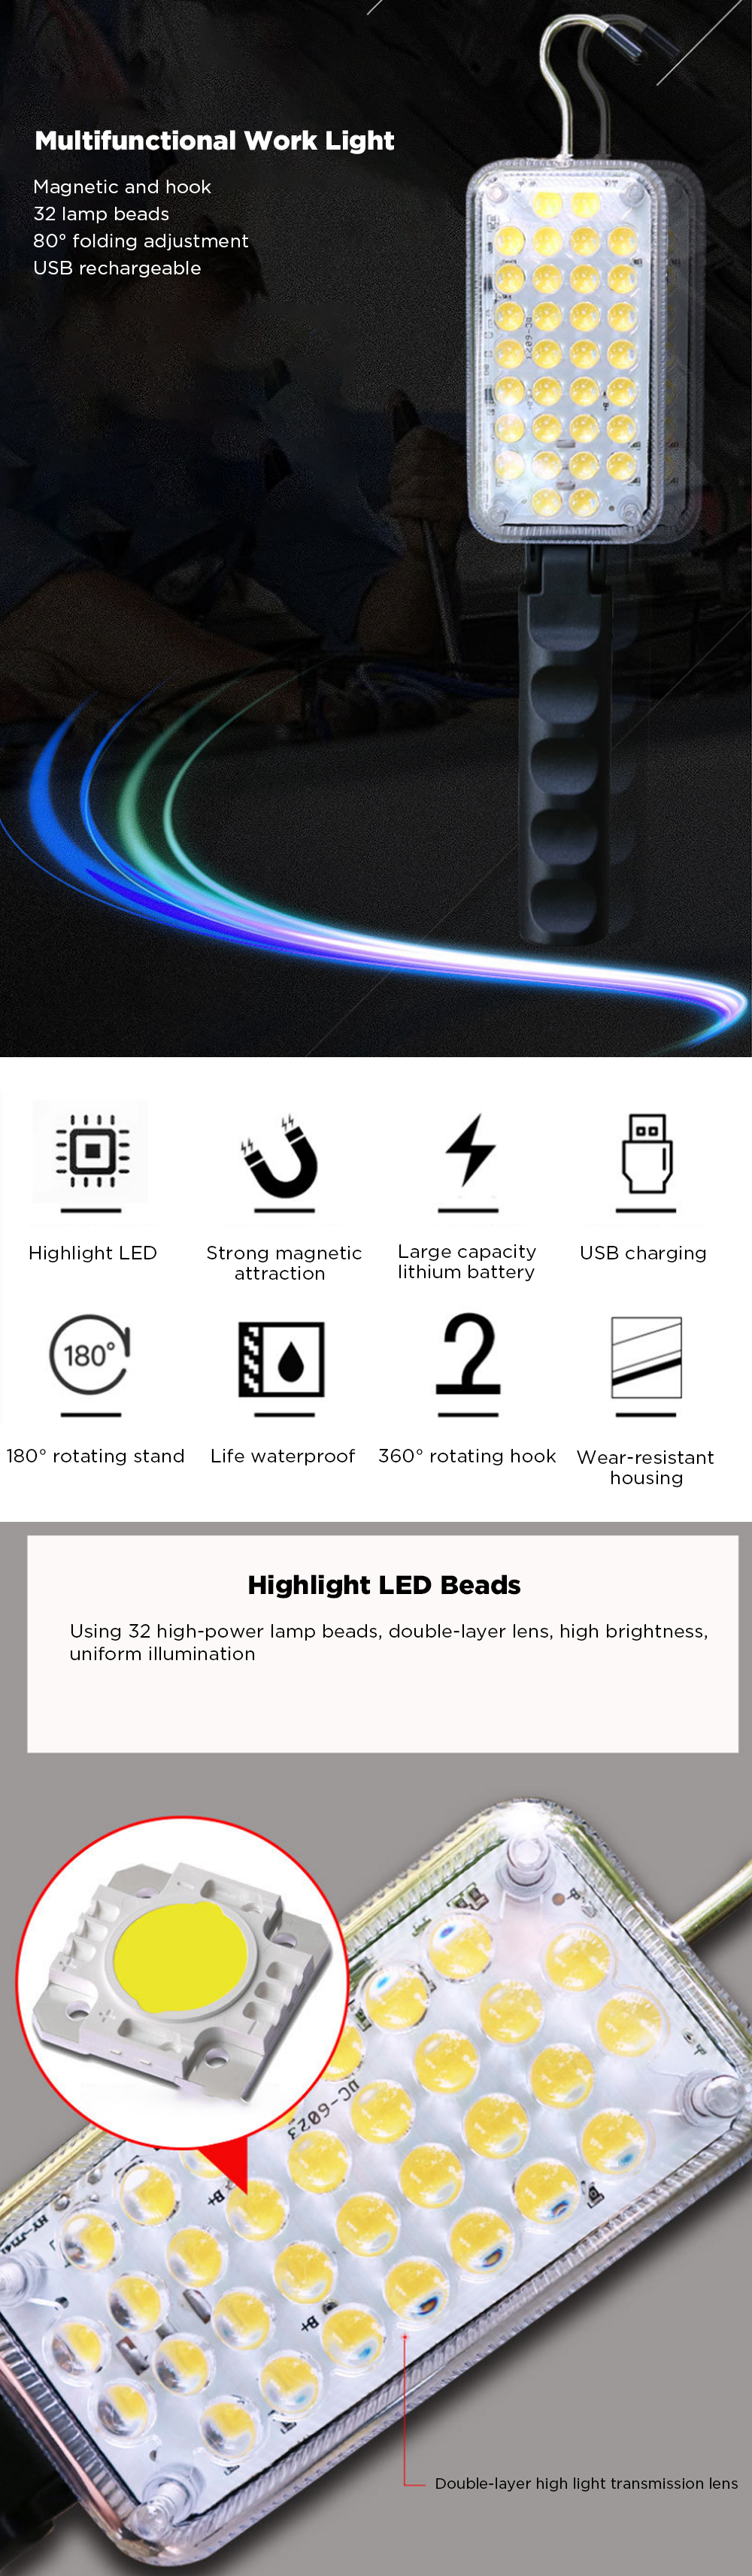 32-Beads-LED-Work-Light-180deg-Handle-Folding-2-Modes-Bright-Strong-Magnet-Hook-USB-Rechargeable-Han-1695437